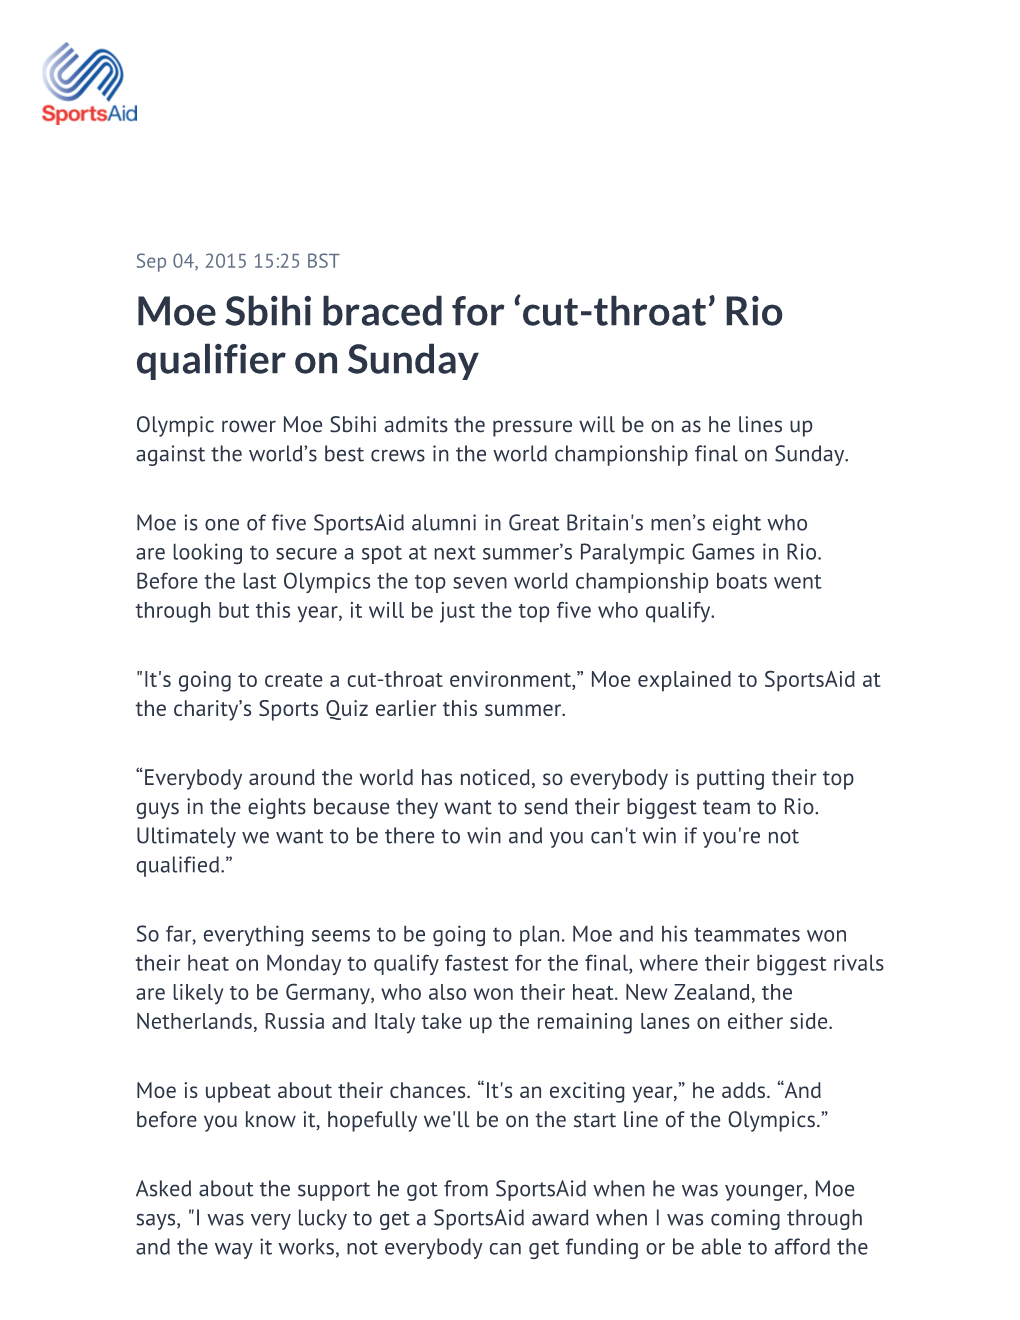 Moe Sbihi Braced for 'Cut-Throat' Rio Qualifier on Sunday